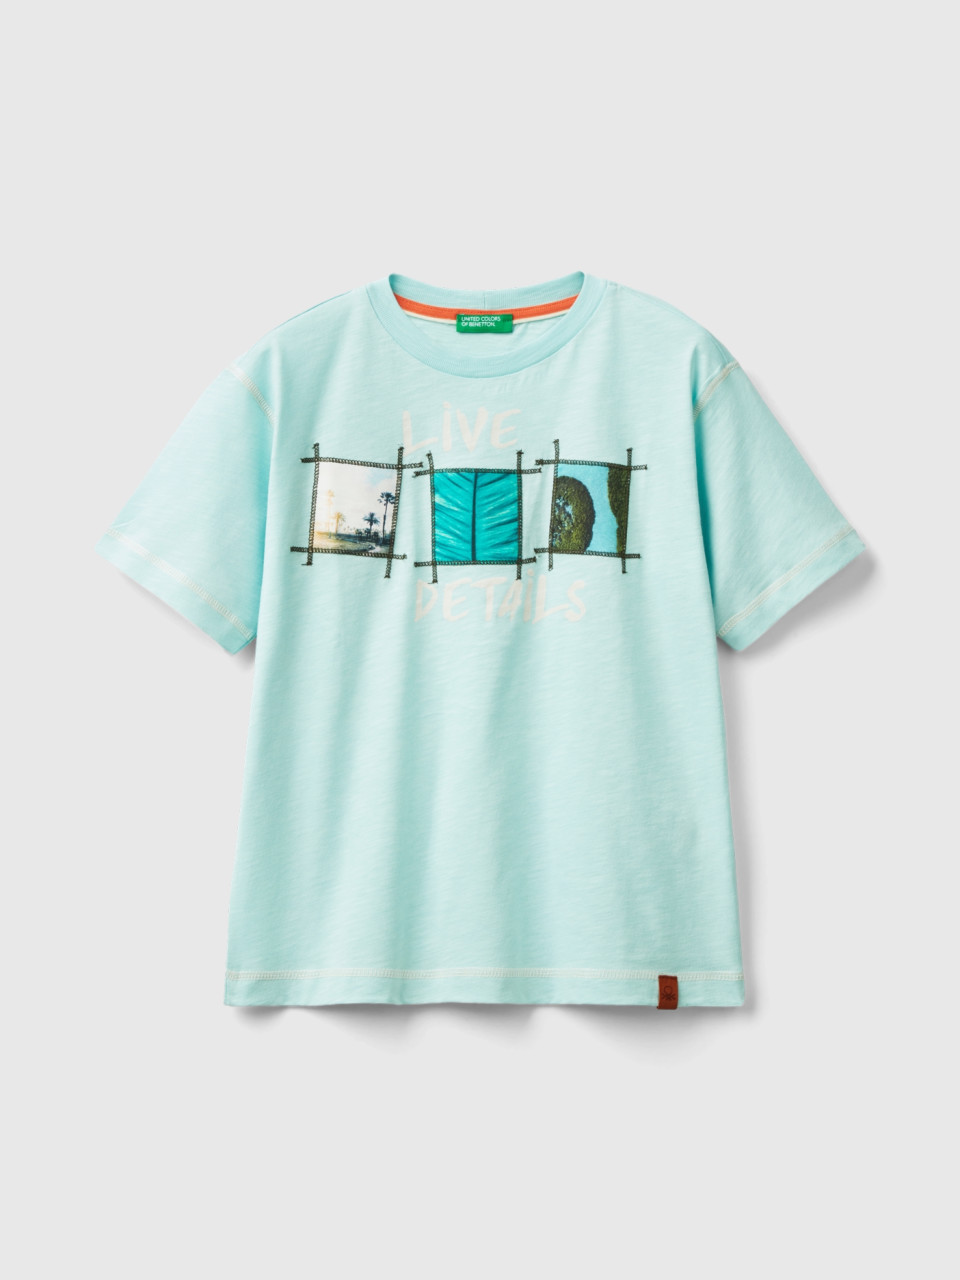 Benetton, T-shirt With Photo Print, Aqua, Kids